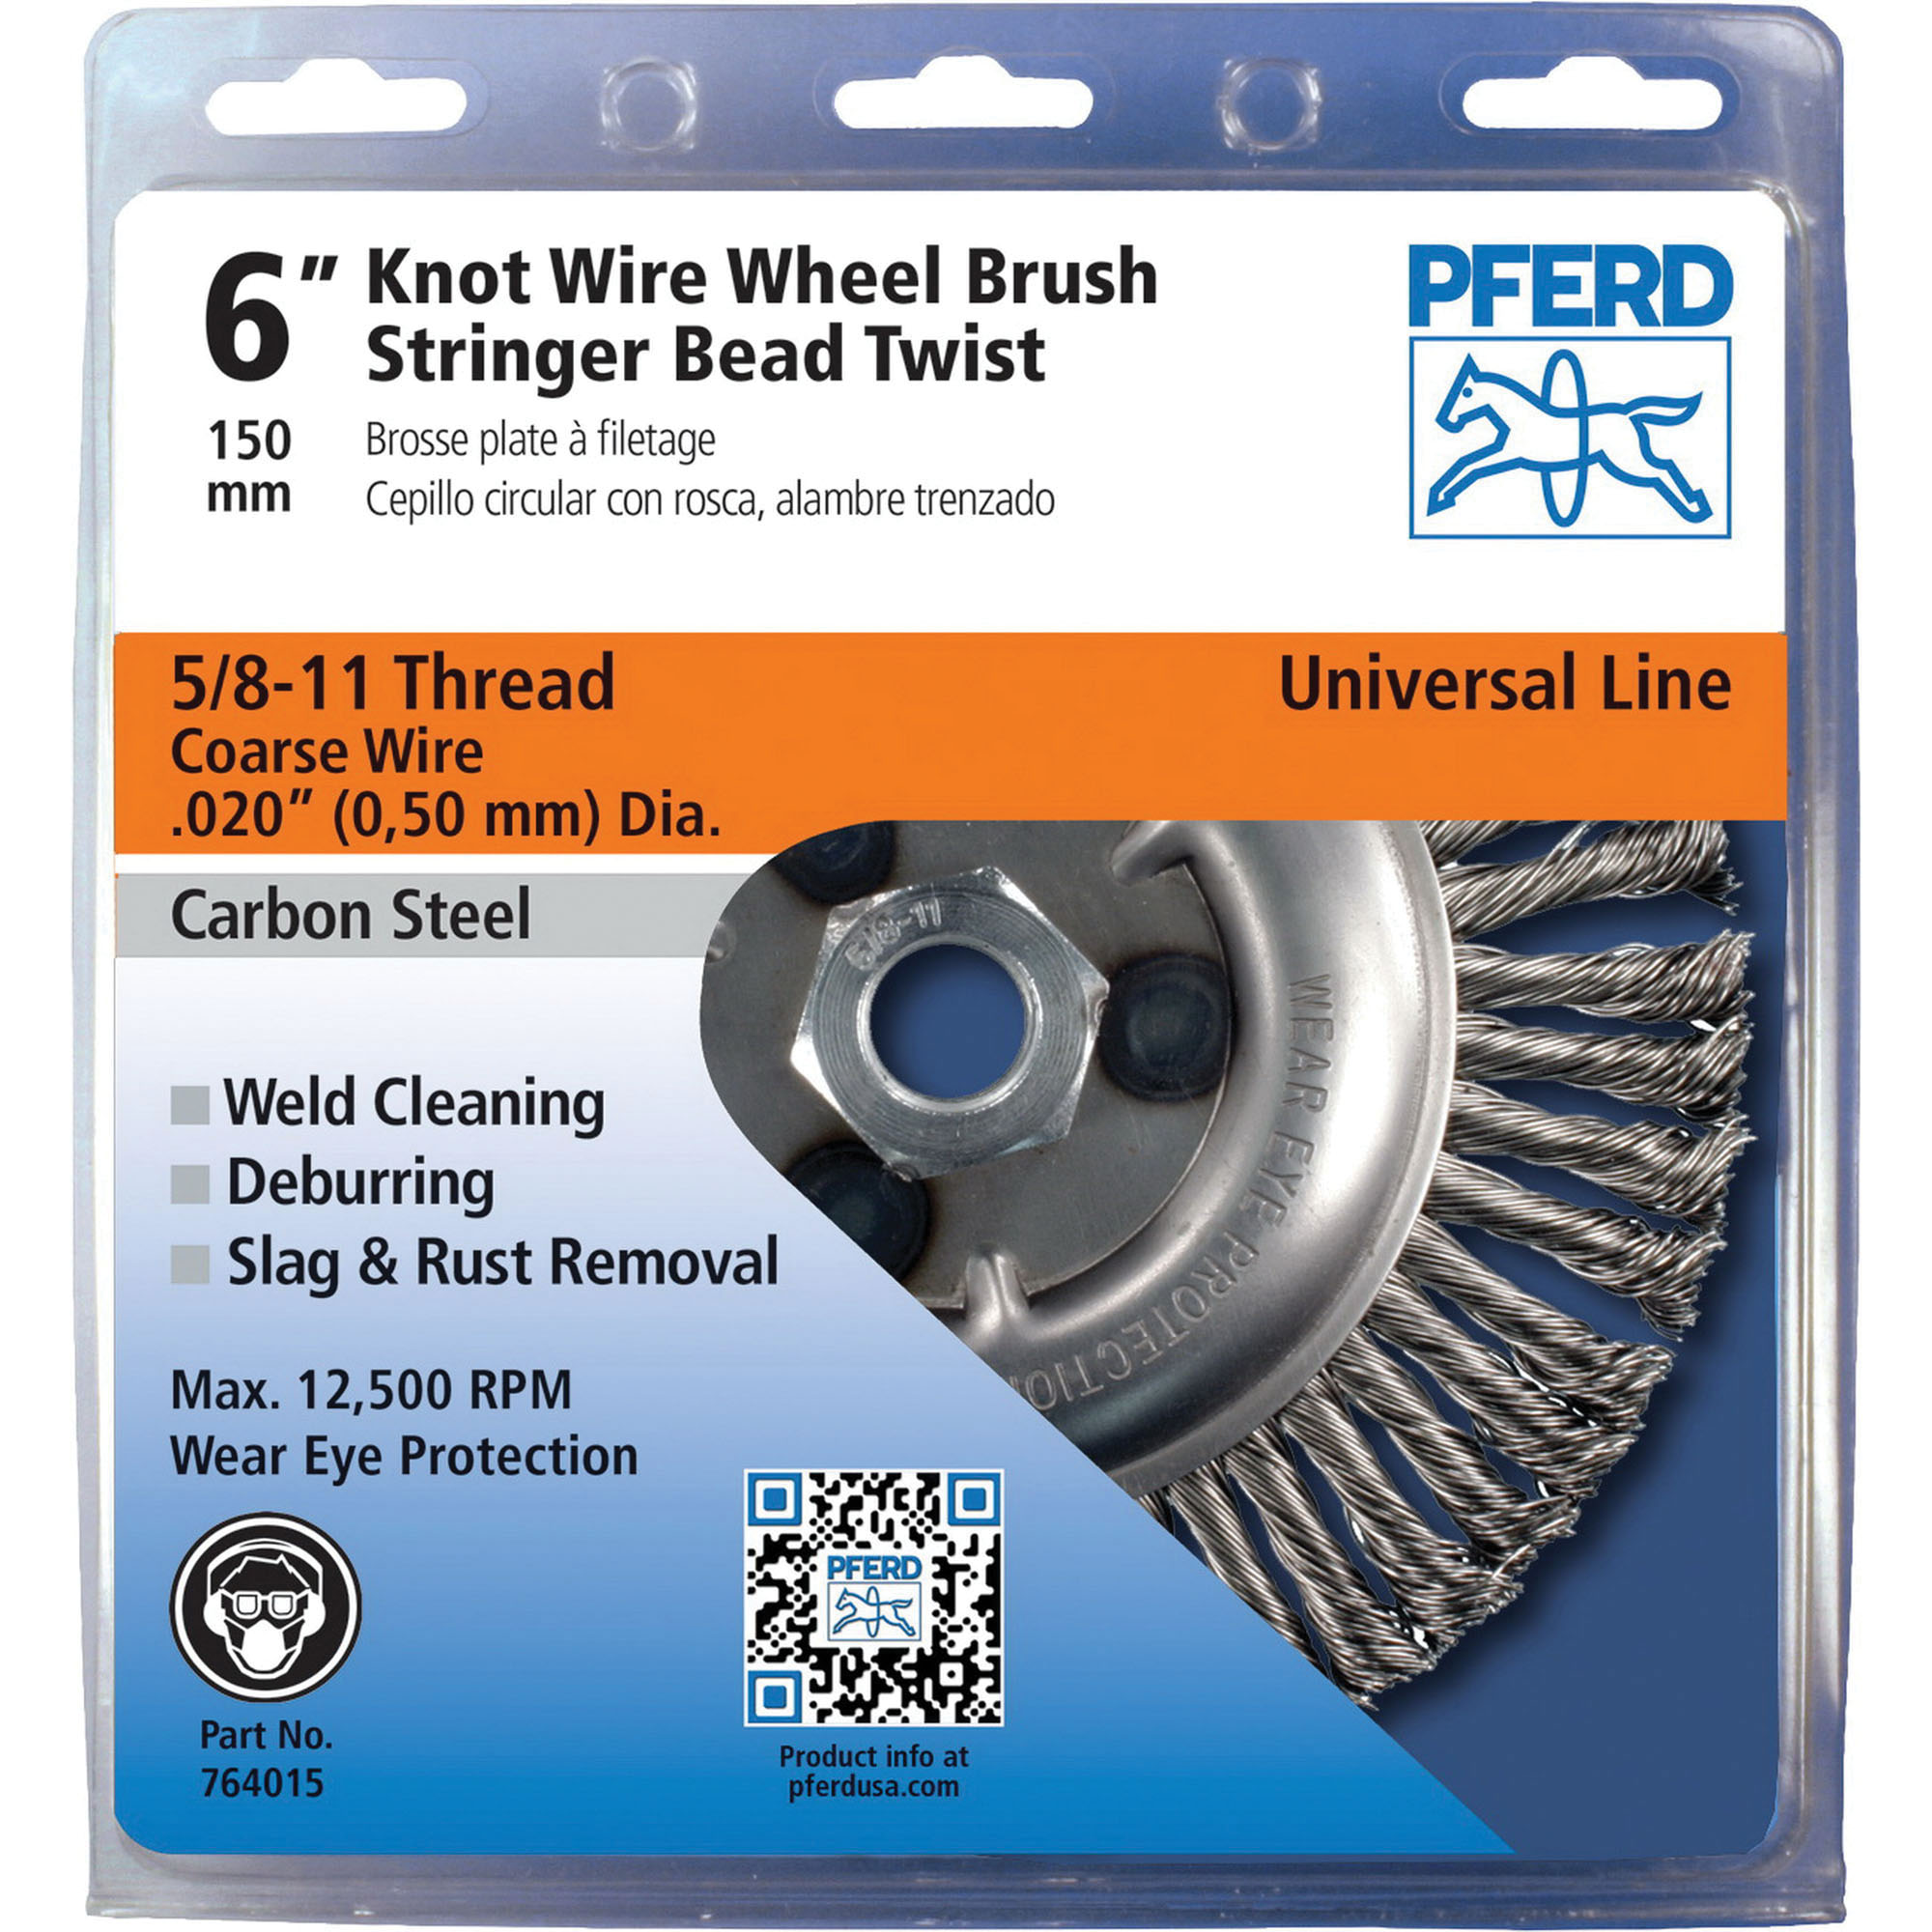 PFERD 763940 Carbon Steel Knot Wire Stringer Bead Twist Wheel Brush, 4 in Dia, 20000 rpm